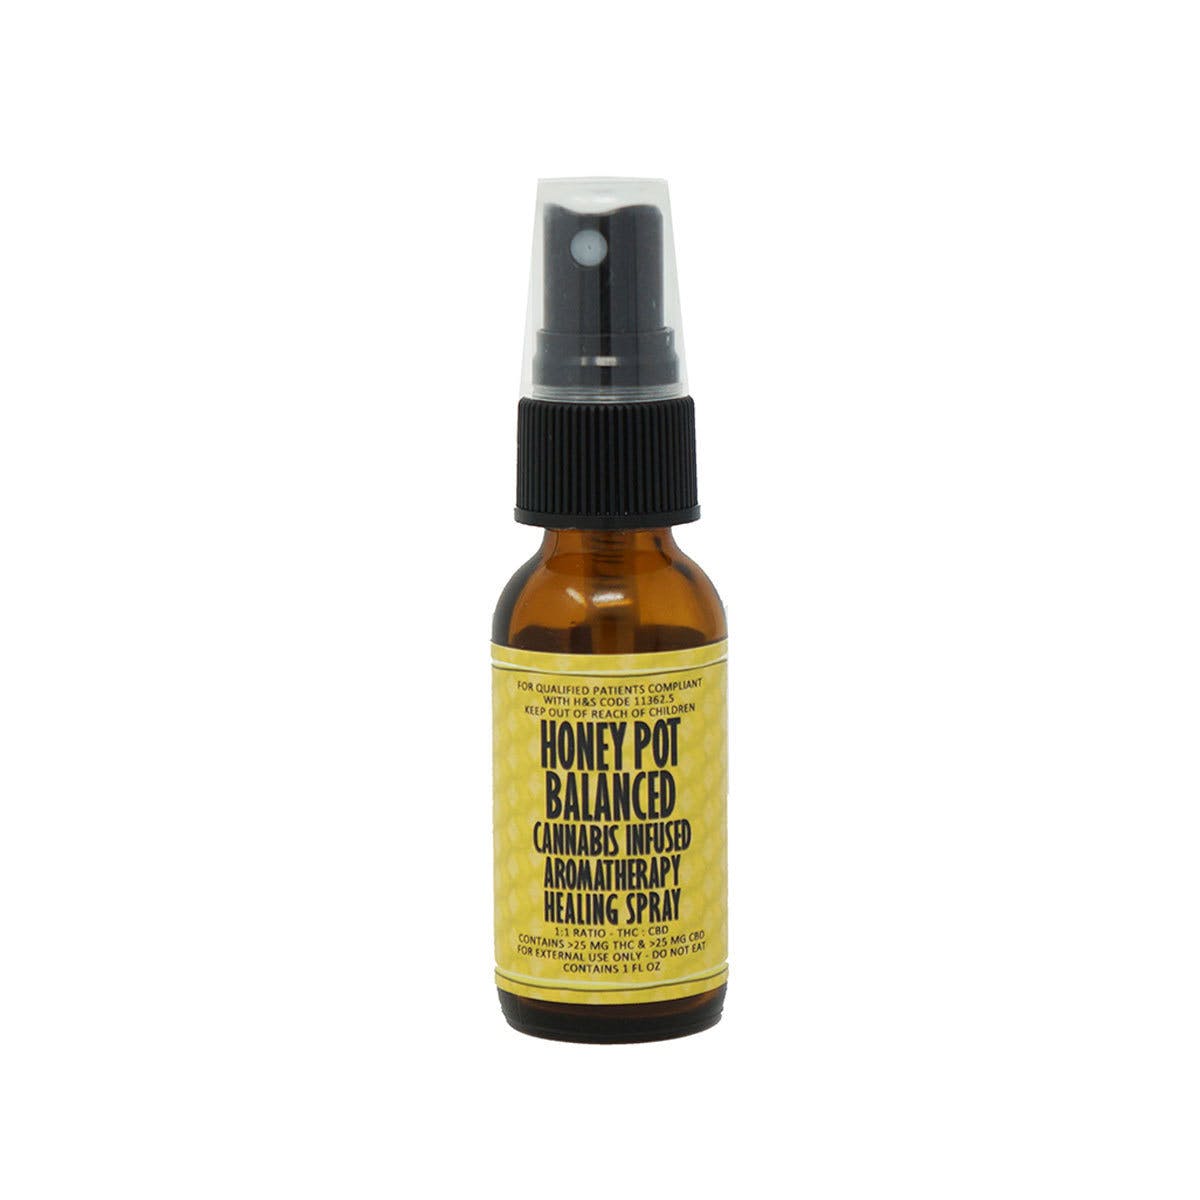 Honey Pot Balanced Healing Spray, 50mg